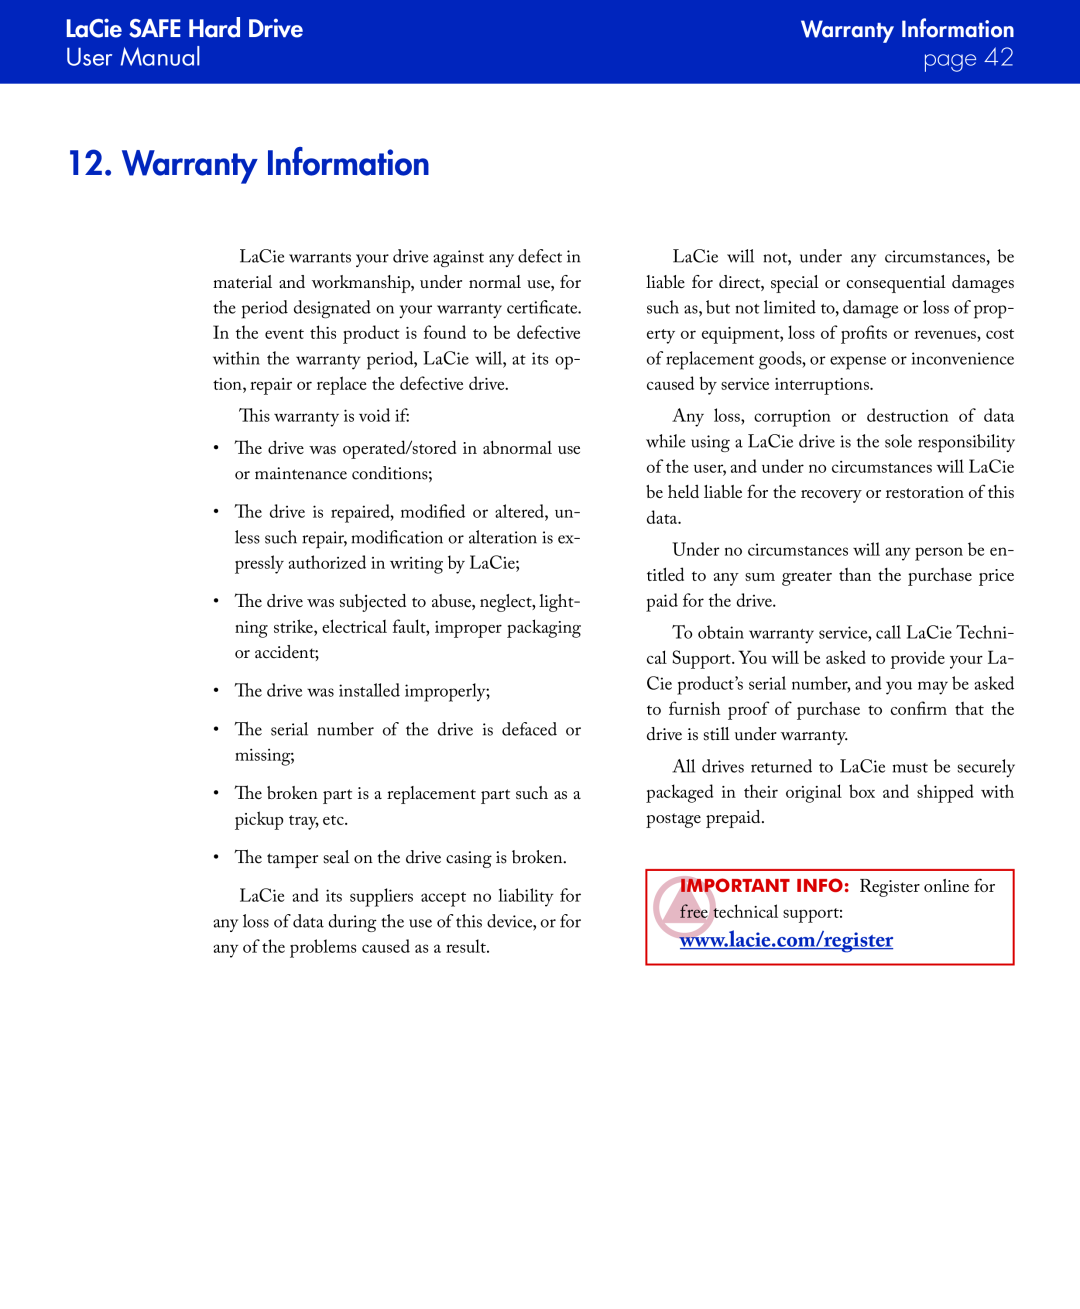 LaCie manual Warranty Information, LaCie SAFE Hard Drive, User Manual, page 